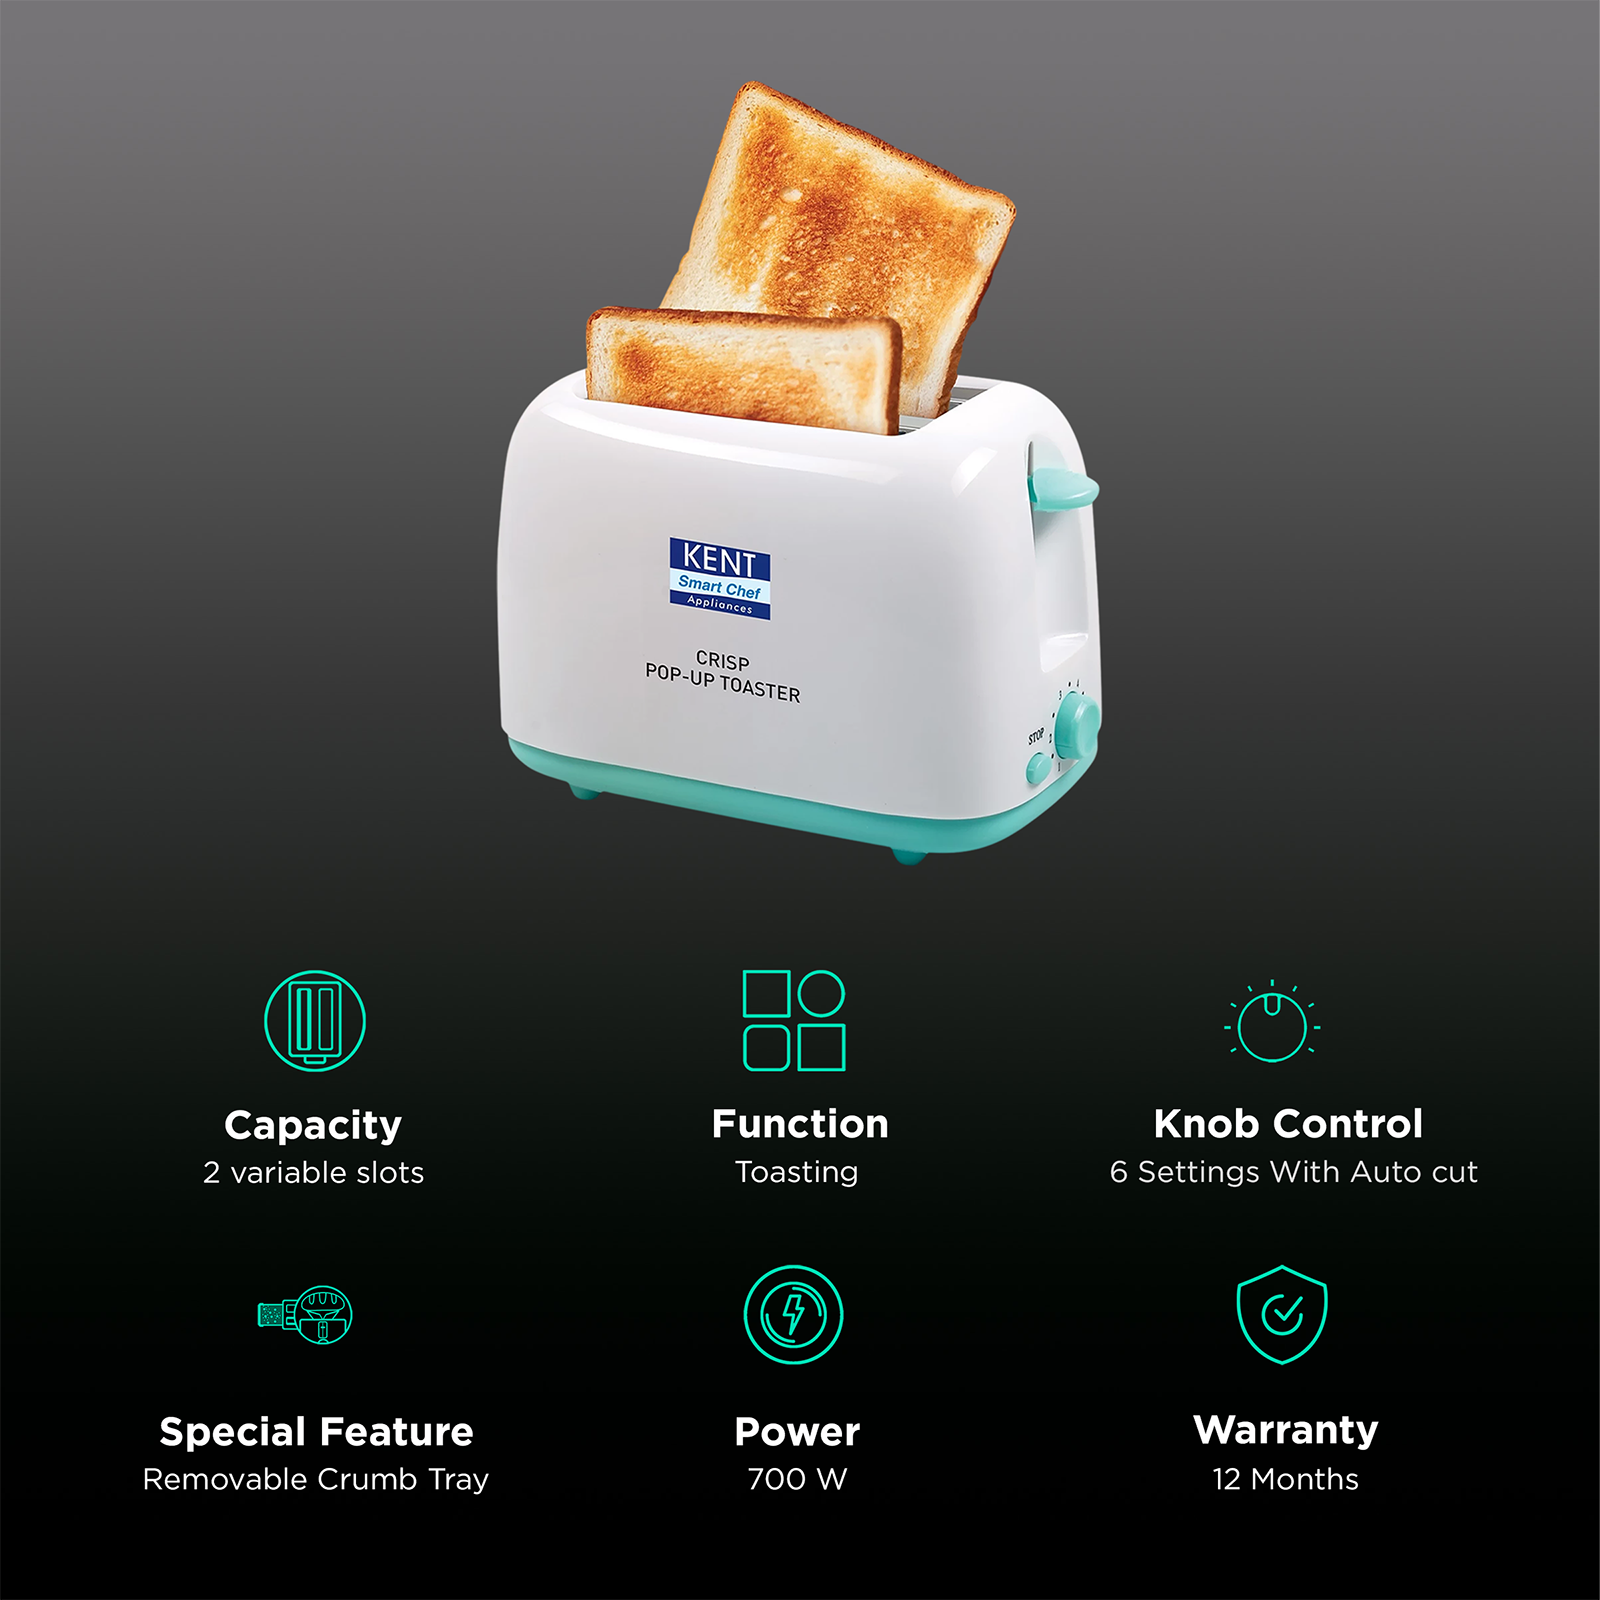 KENT Crisp Pop-Up Toaster: Buy Electric Bread Toaster at Best Price Online